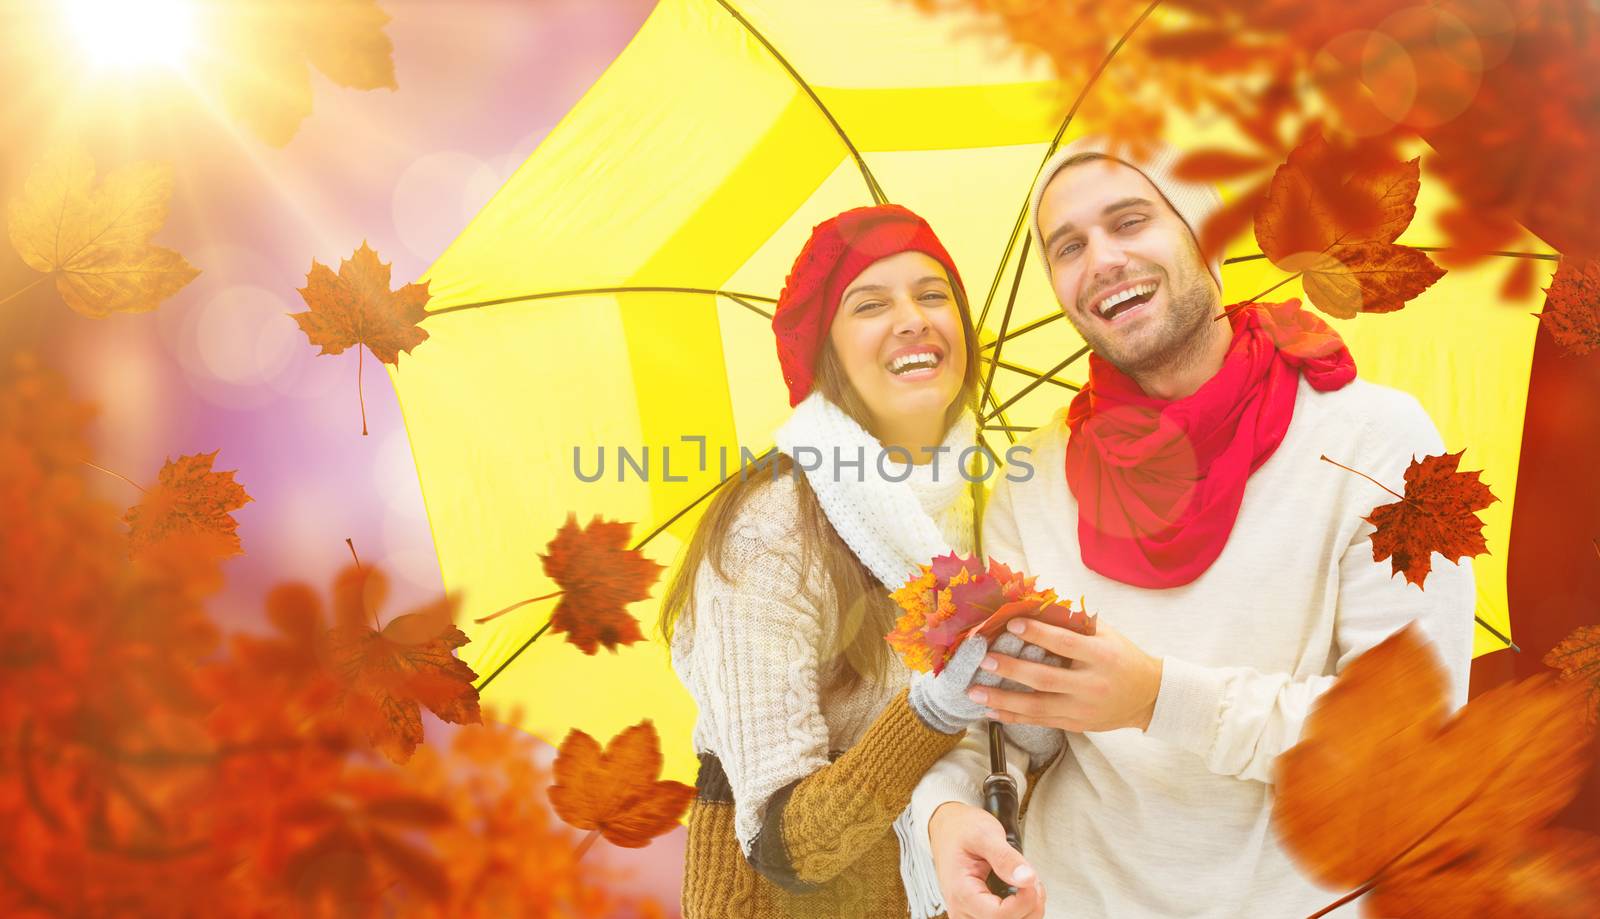 Autumn couple holding umbrella against dark abstract light spot design